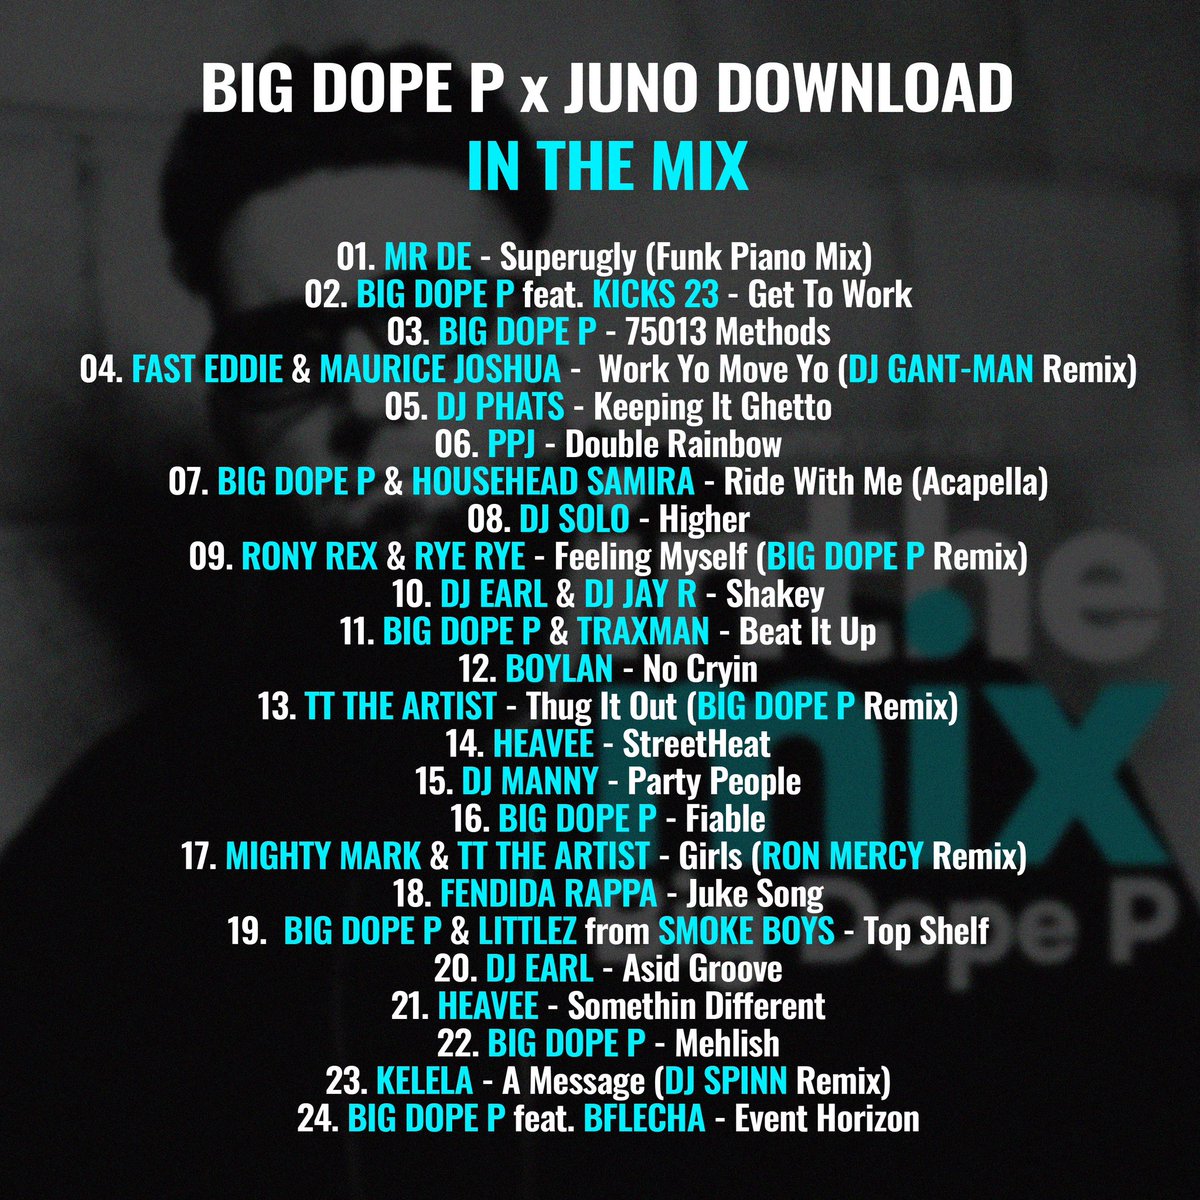 new mix for @junodownload 💫 junodownload.com/in-the-mix-big… featuring tracks from @dj_phats773 @DeejayEarl_ @RyeRye @boylannate @tttheartist @heavee773 @Manny_music420 @iammightymark @DJ_Spinn and more